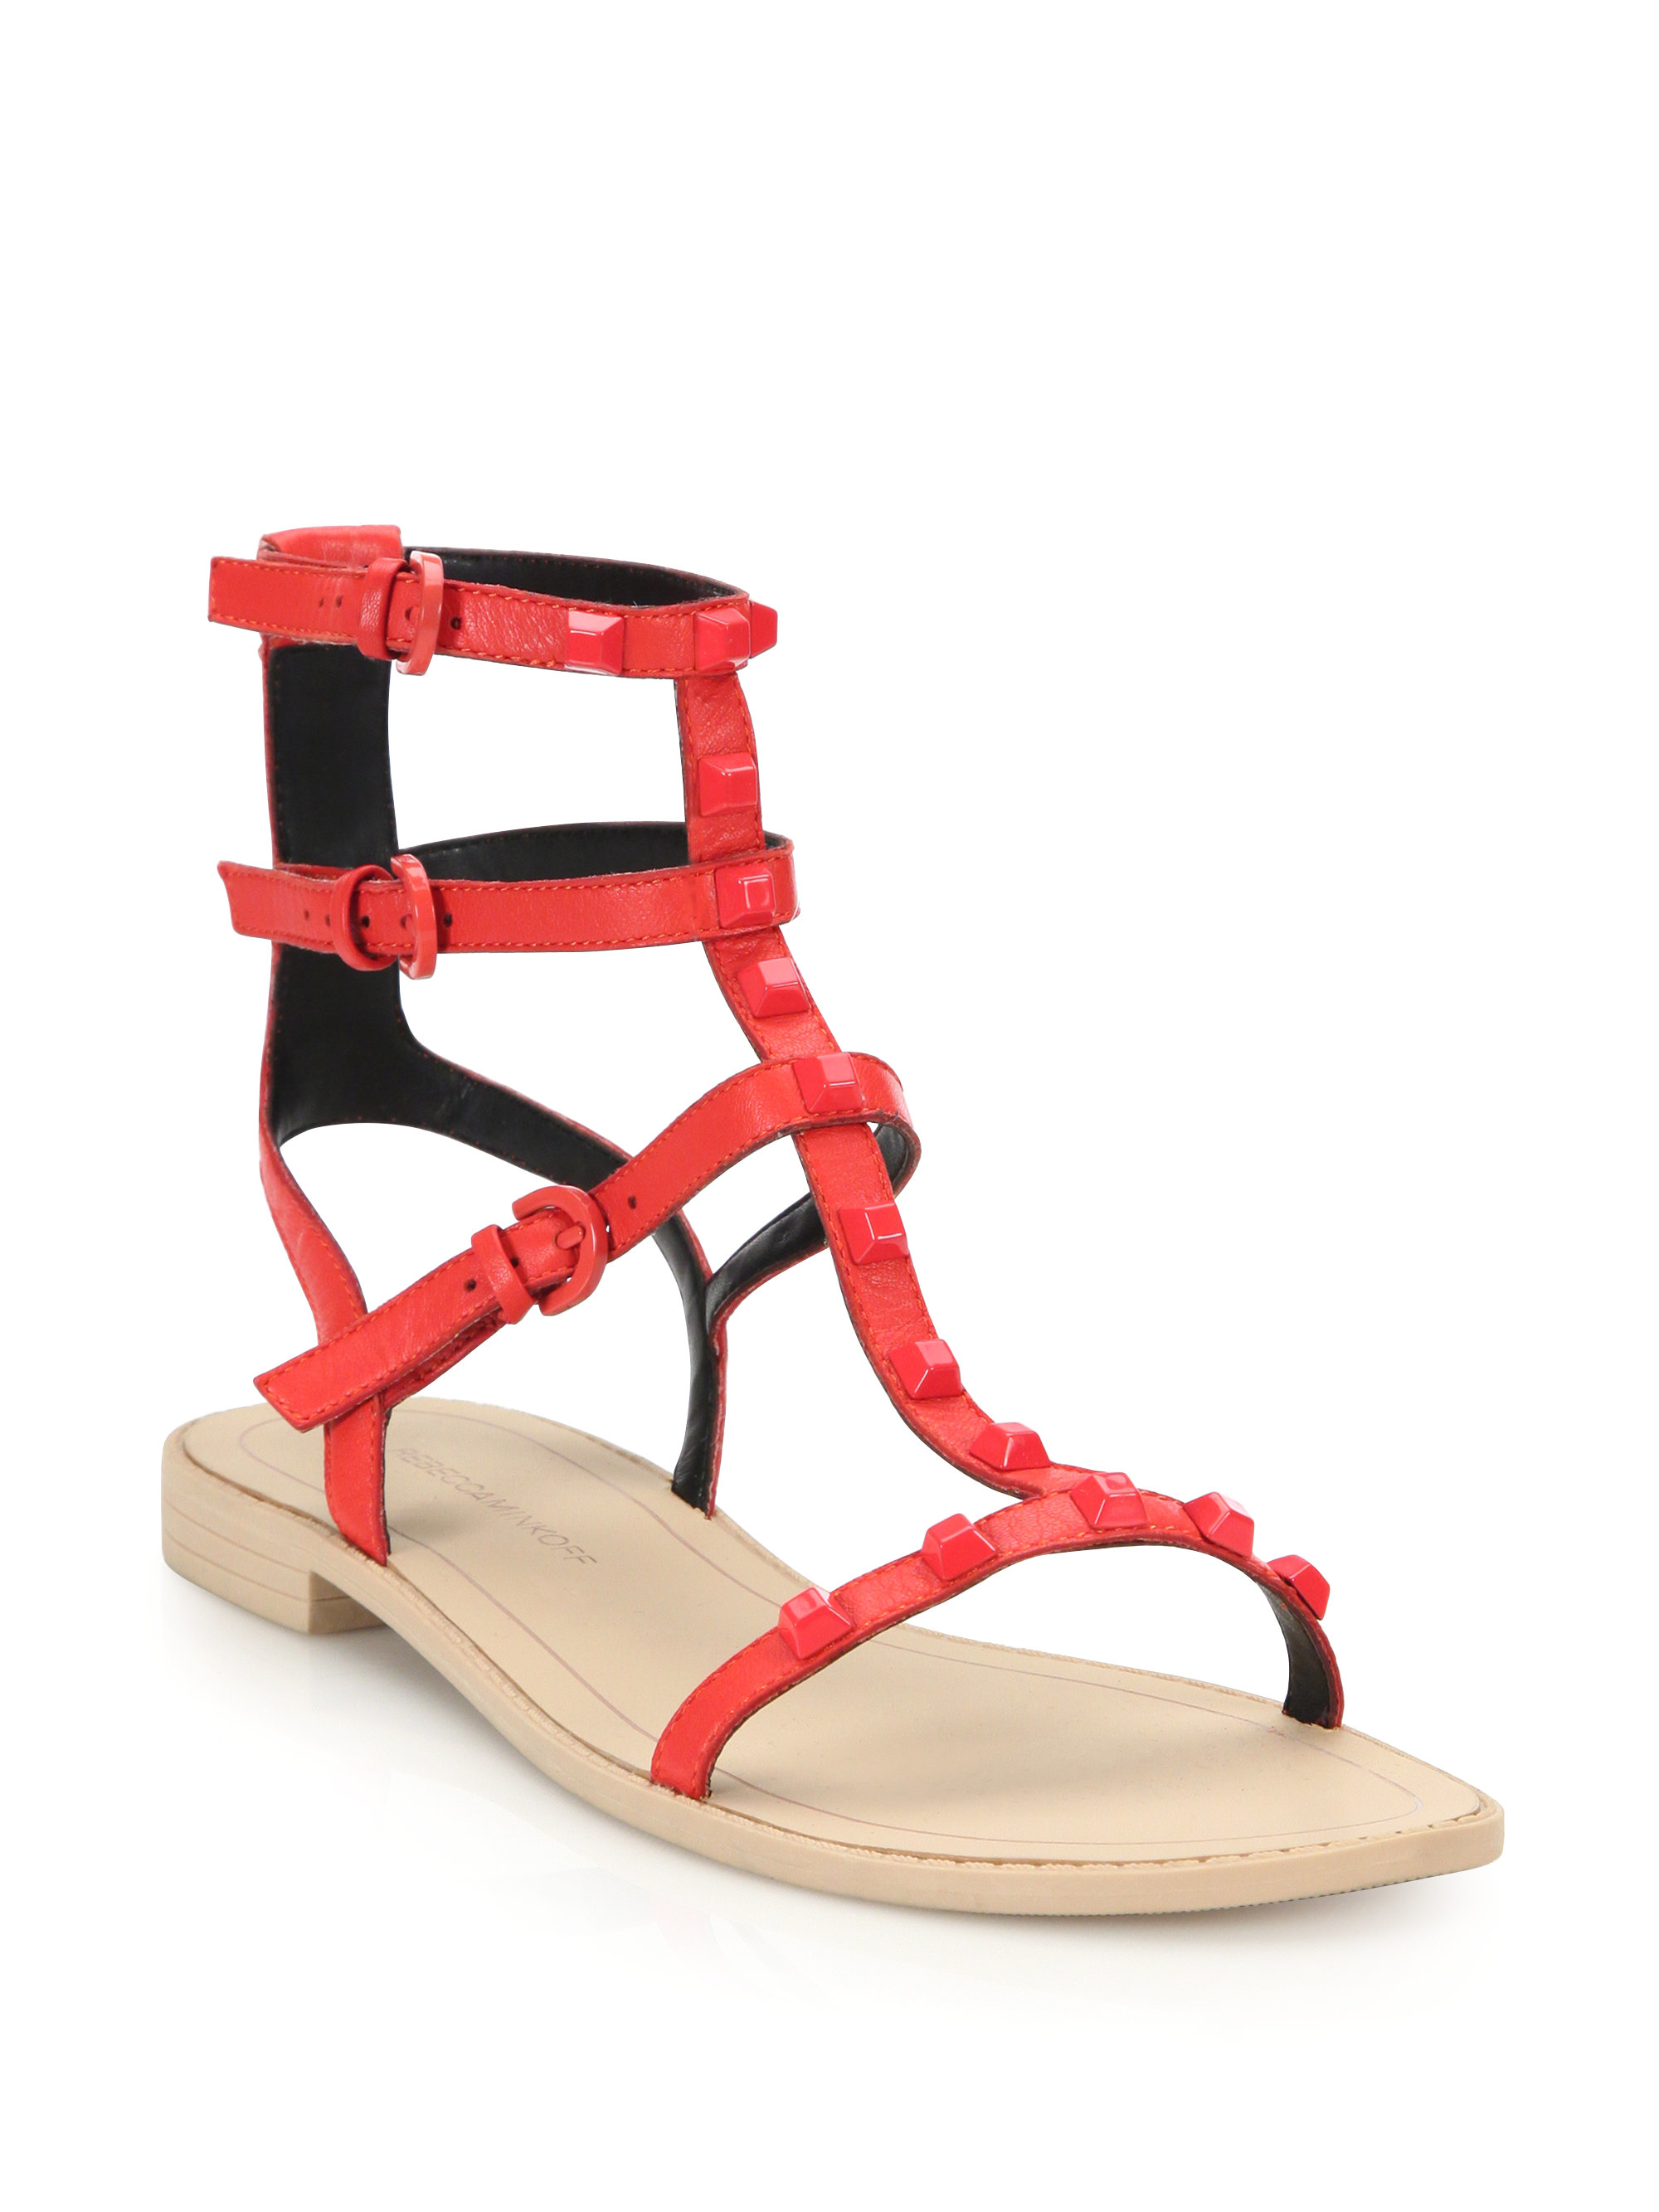 Rebecca Minkoff Georgina Studded Leather Gladiator Sandals in Red | Lyst